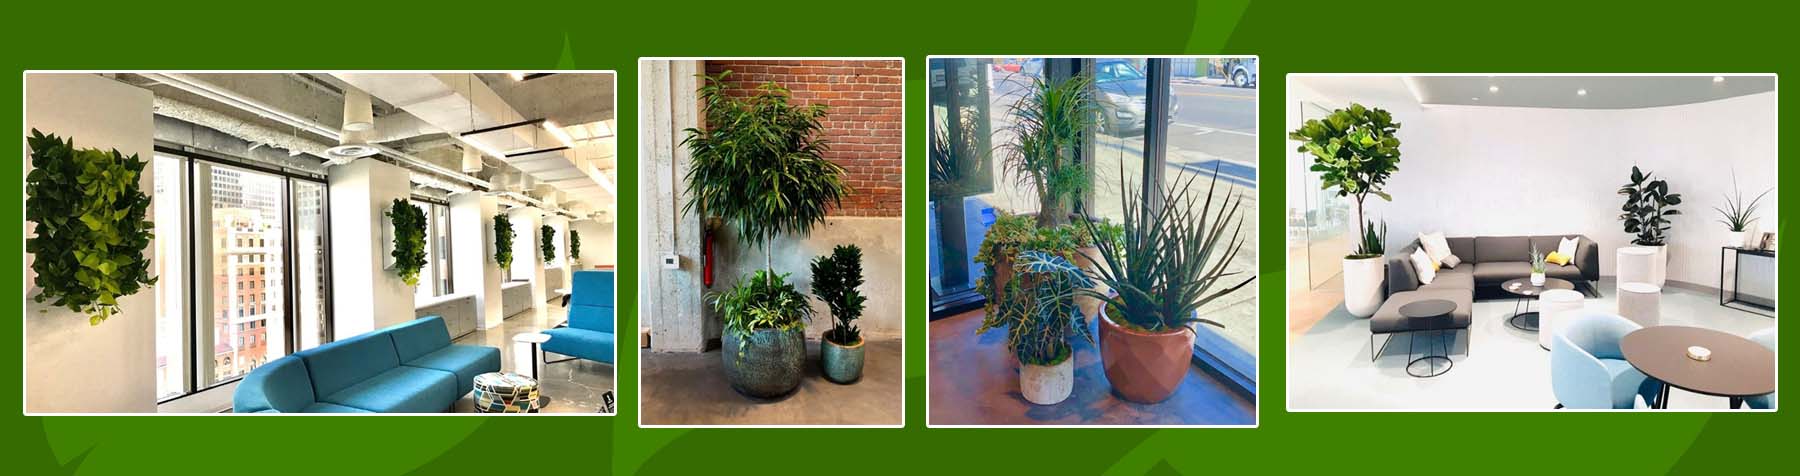 indoor plant care professionals, Full-service plant care